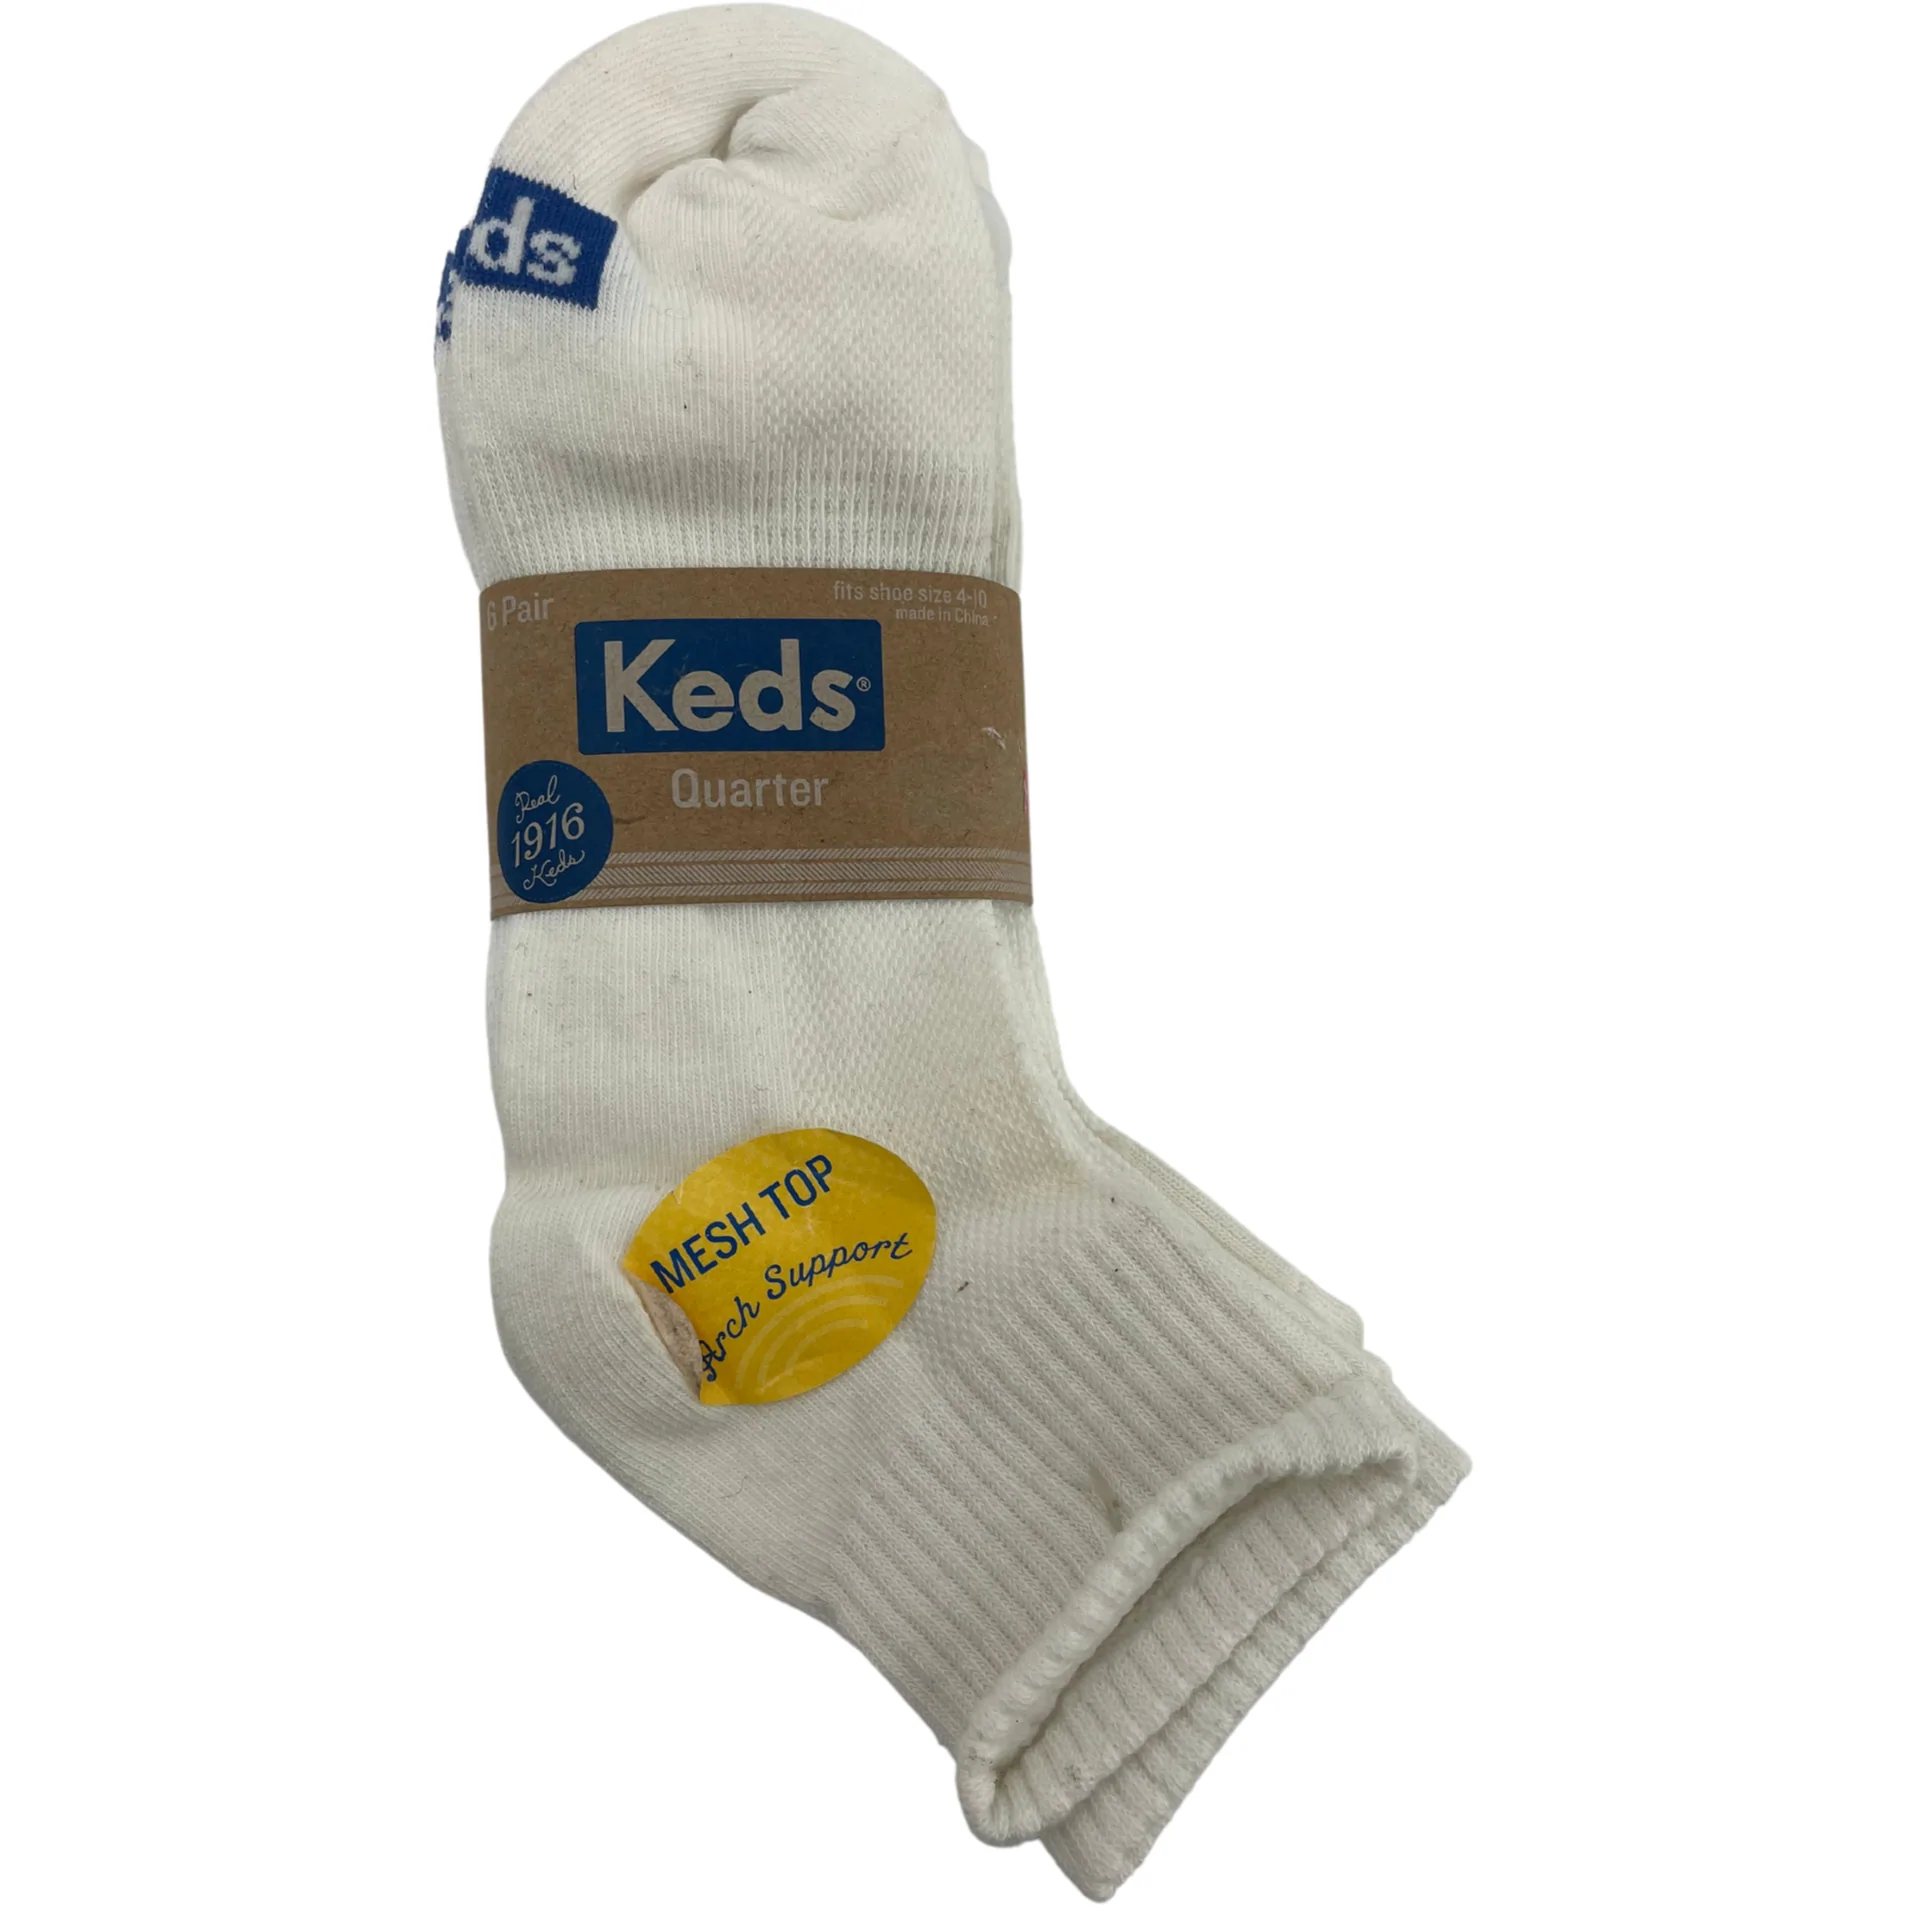 Keds Women's Quarter Length Socks / 6 Pairs / Off-White / Shoe Size 4-10